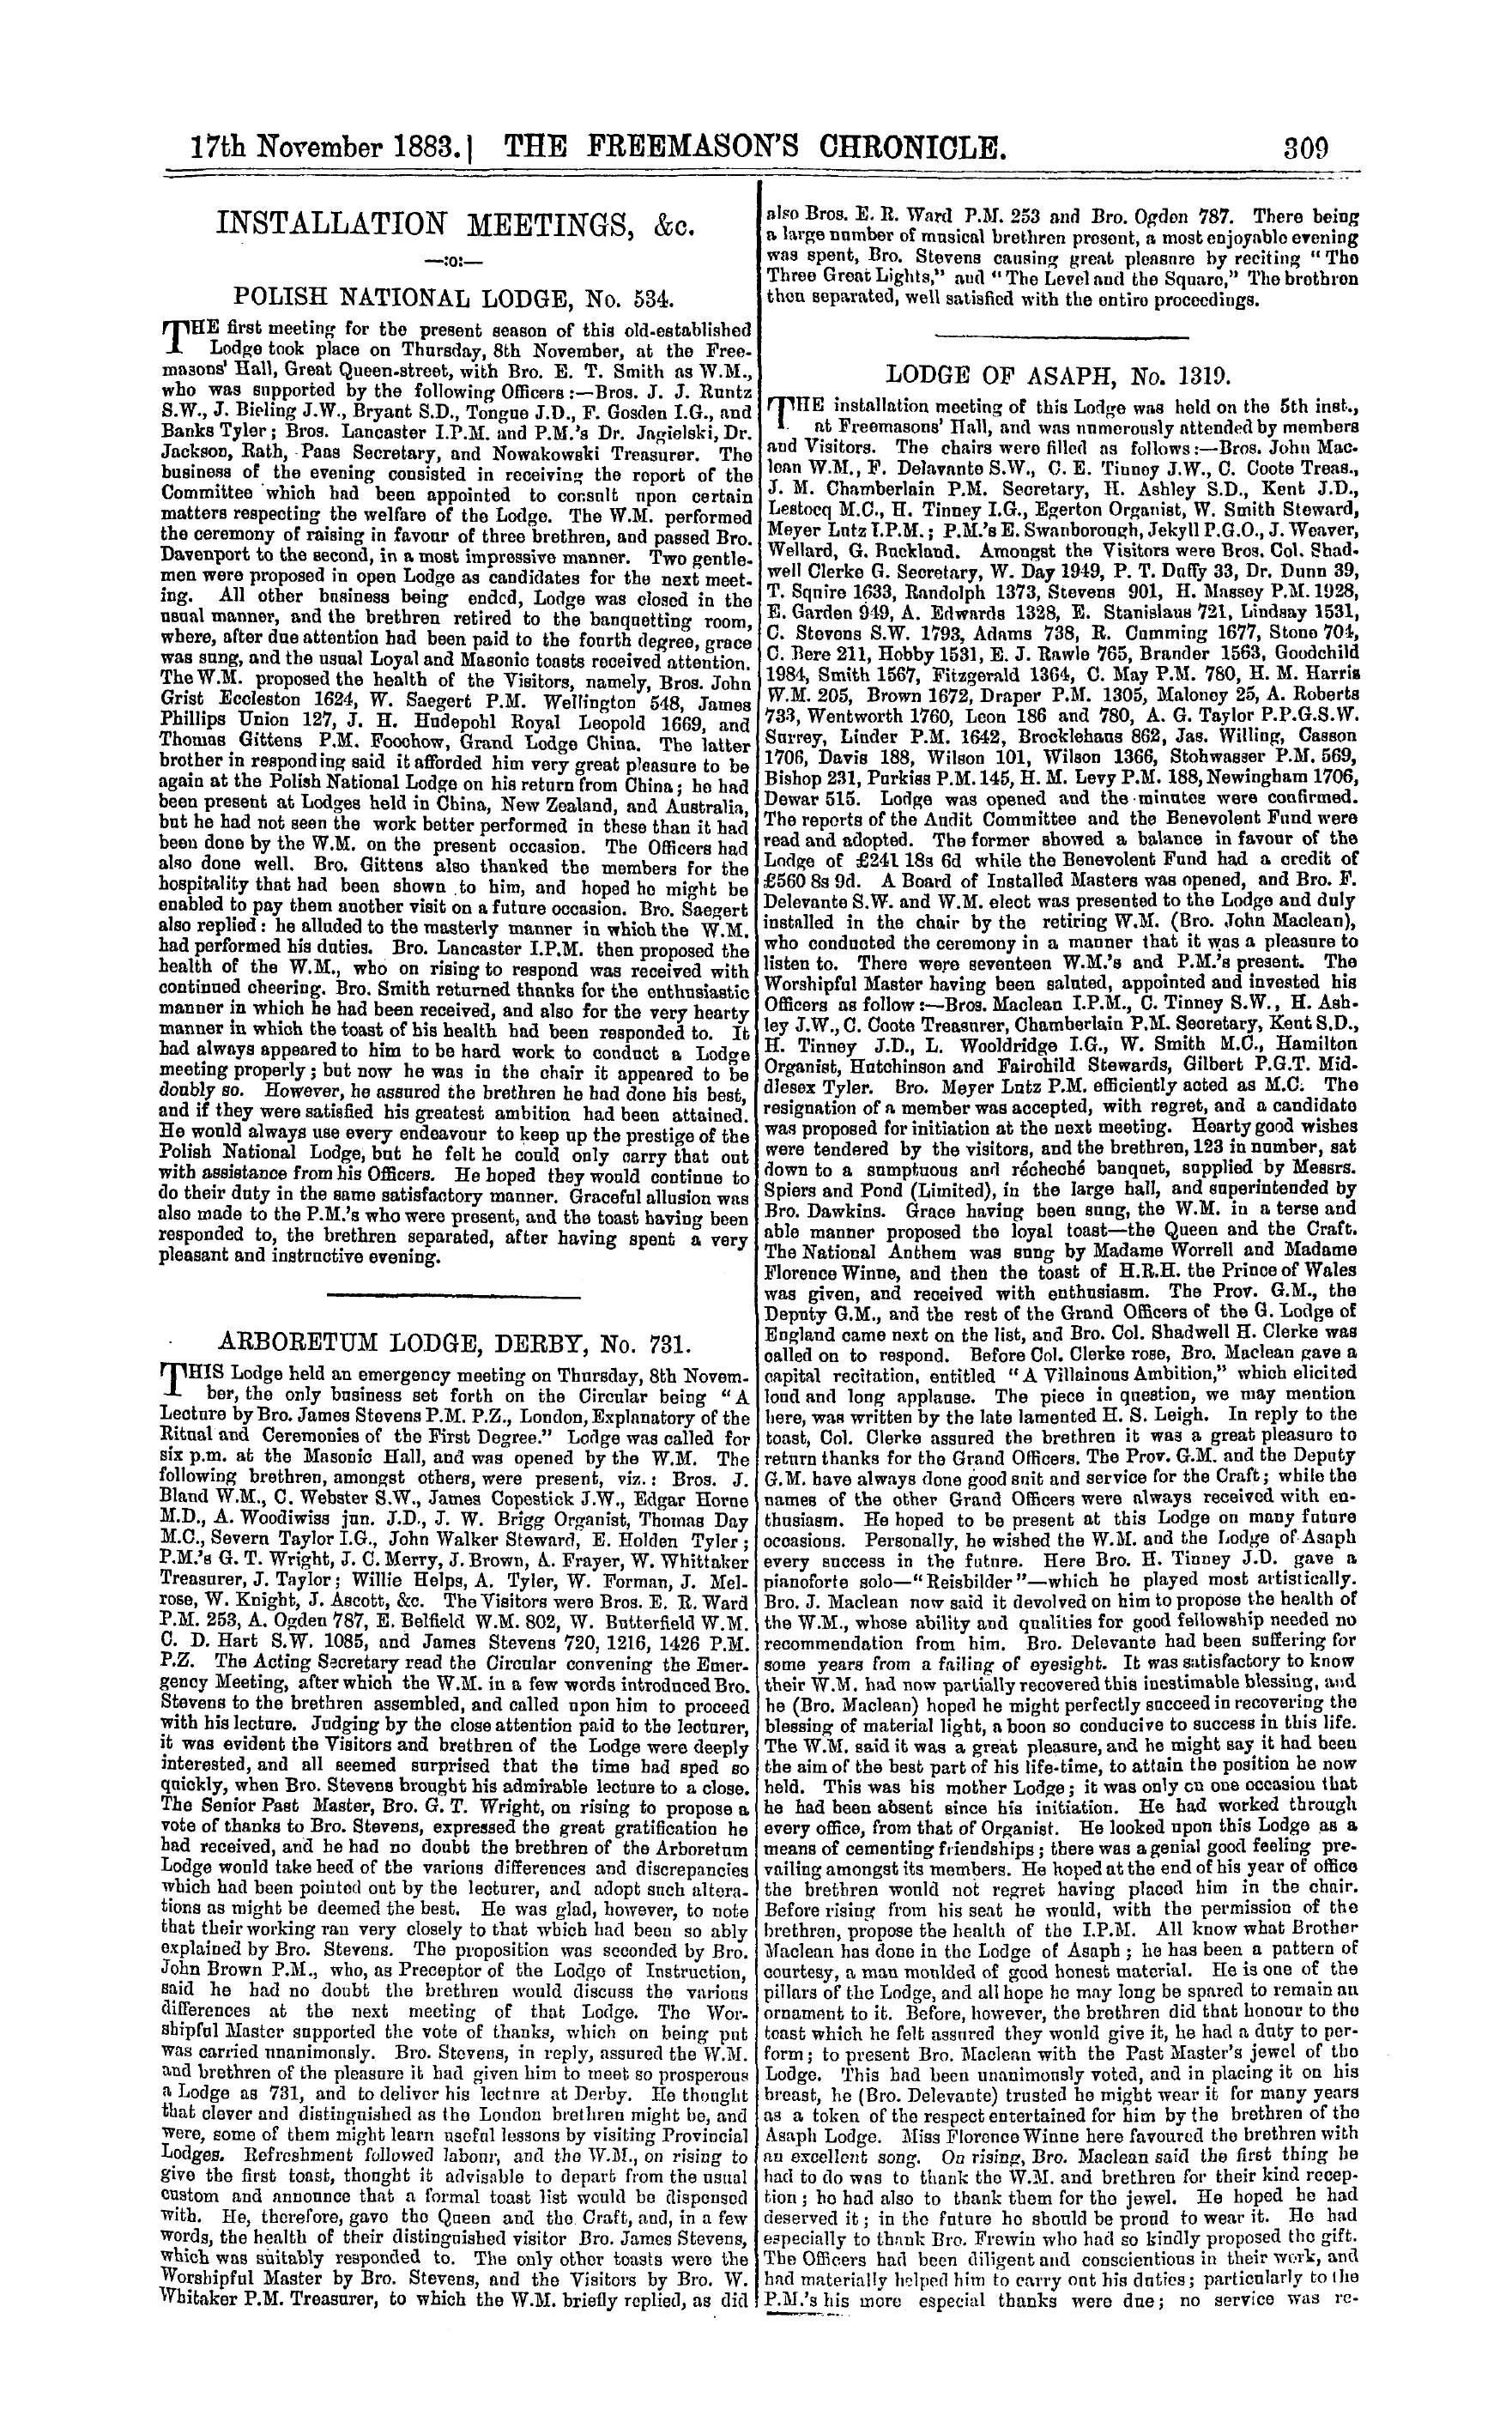 The Freemason's Chronicle: 1883-11-17 - Lodge Of Asaph, No. 1319.